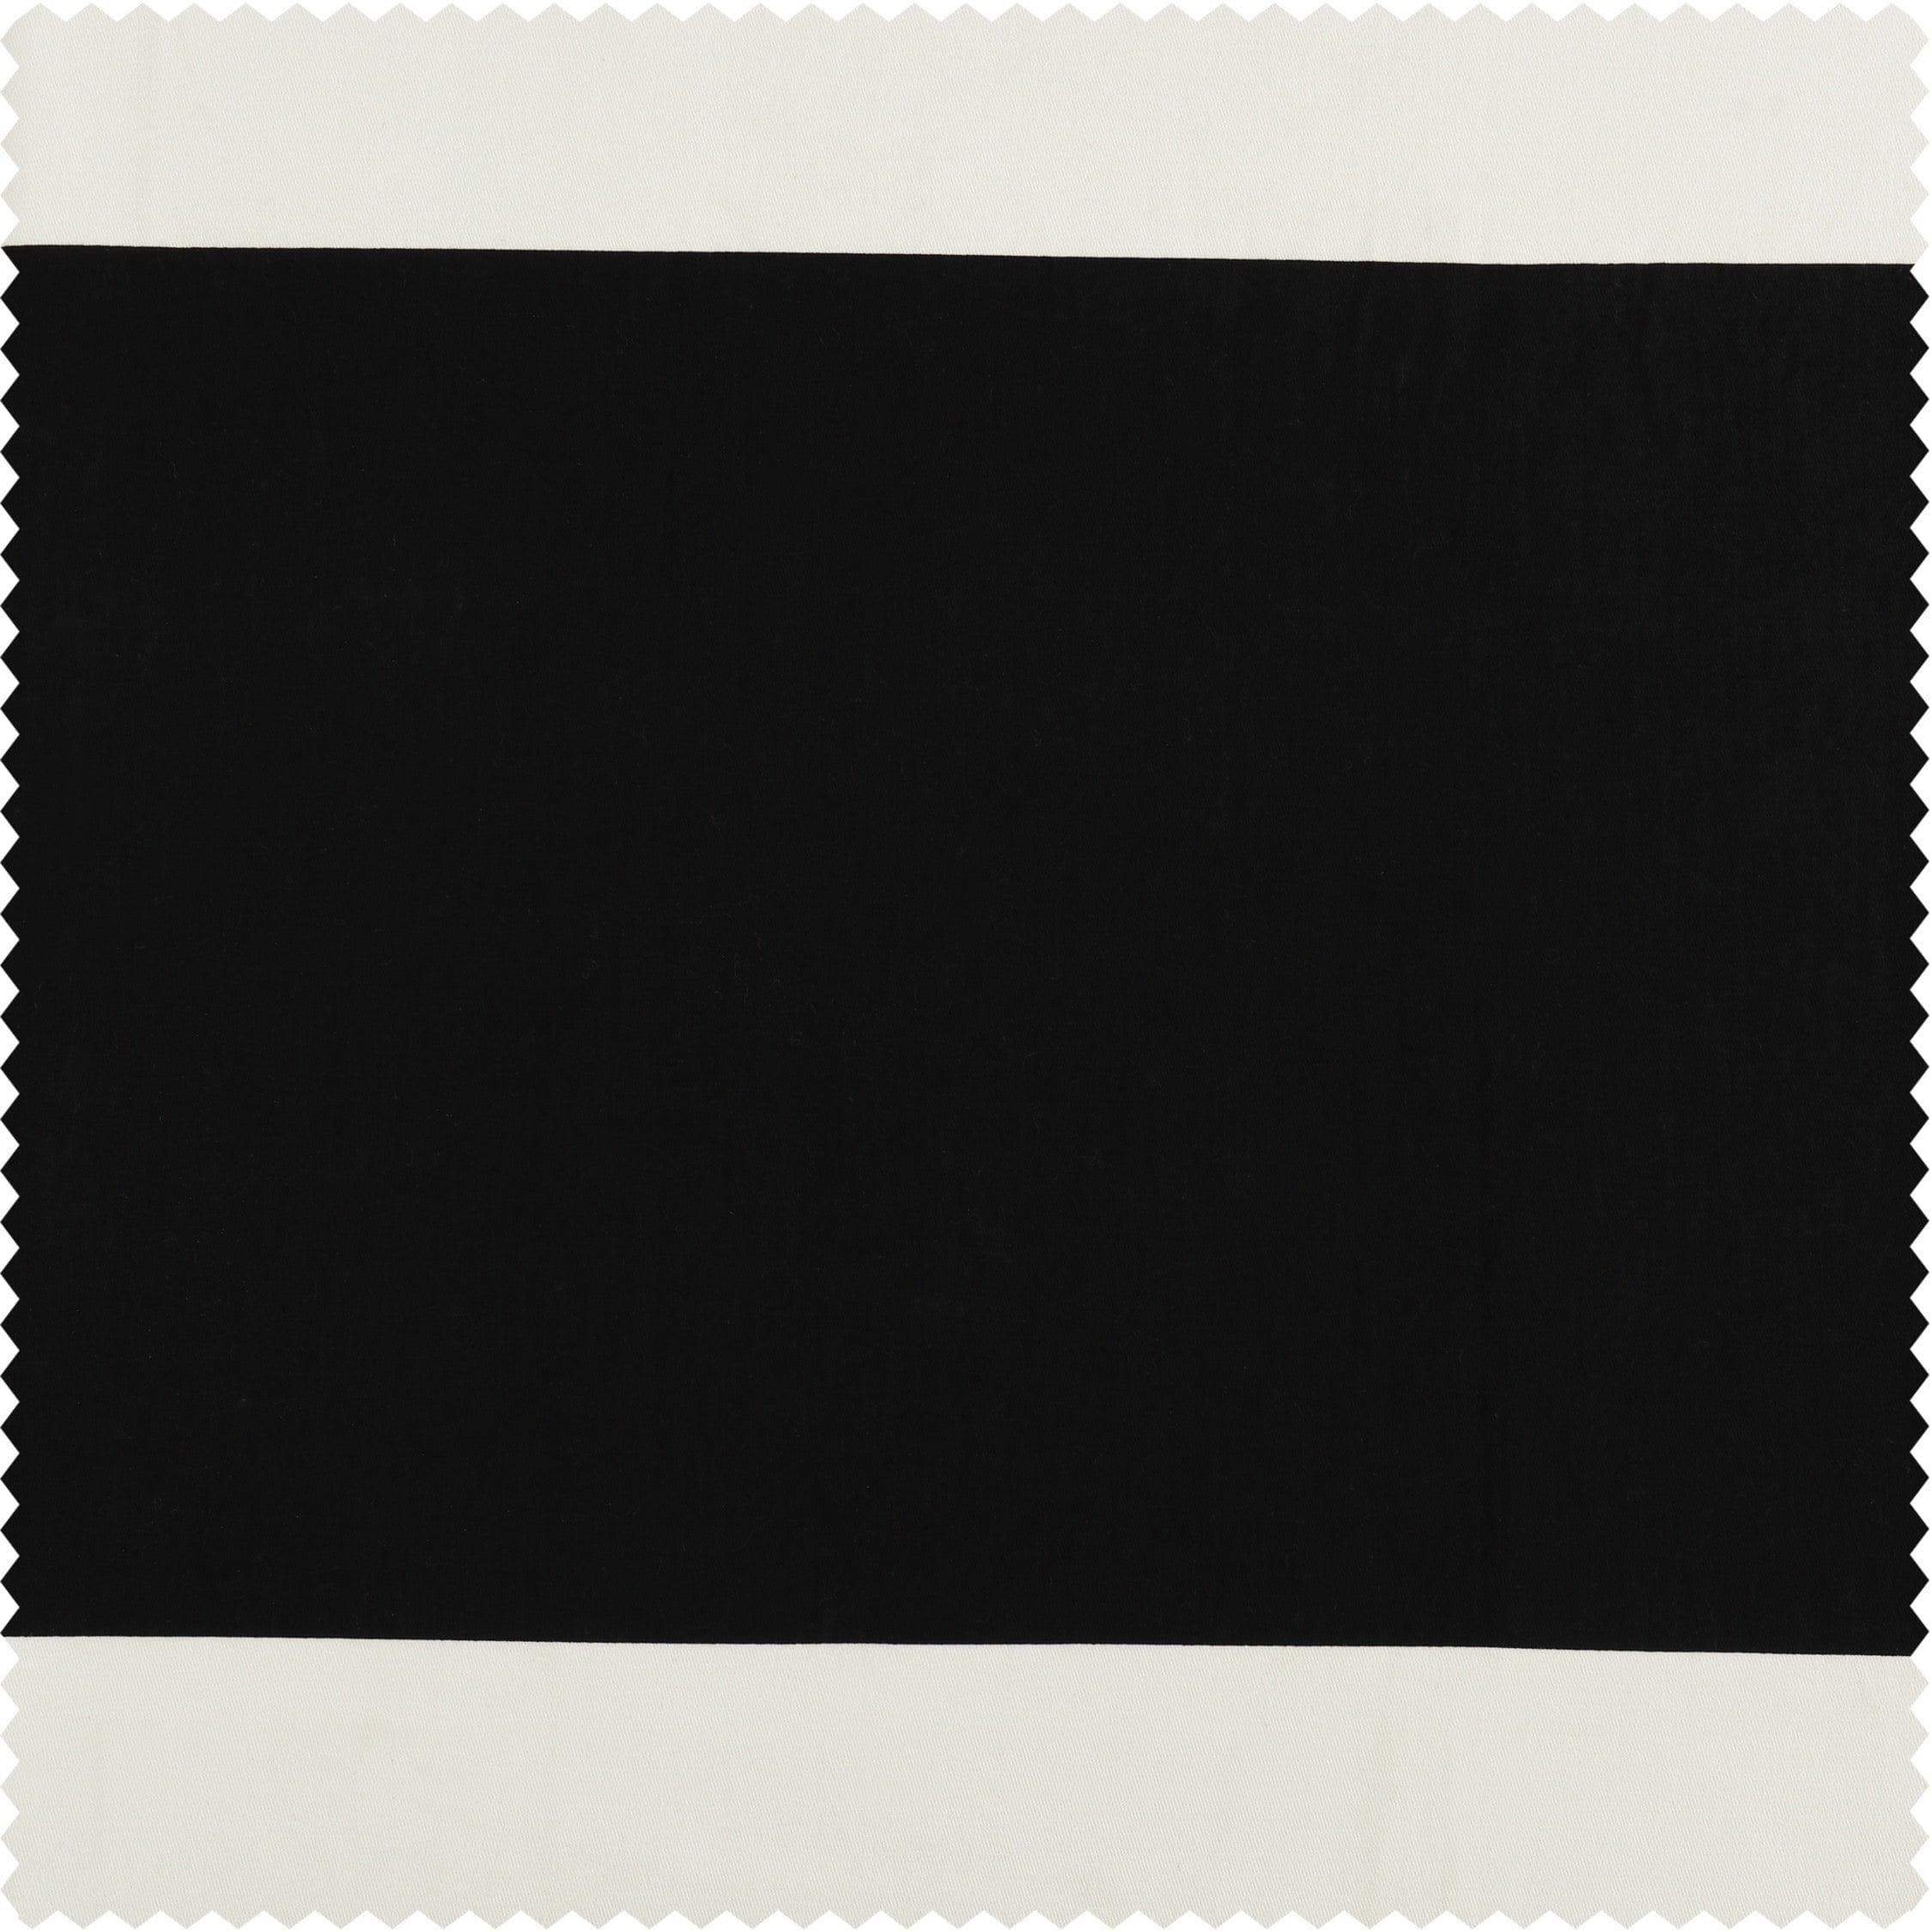 Onyx Black & Off White Horizontal Striped Printed Cotton Swatch